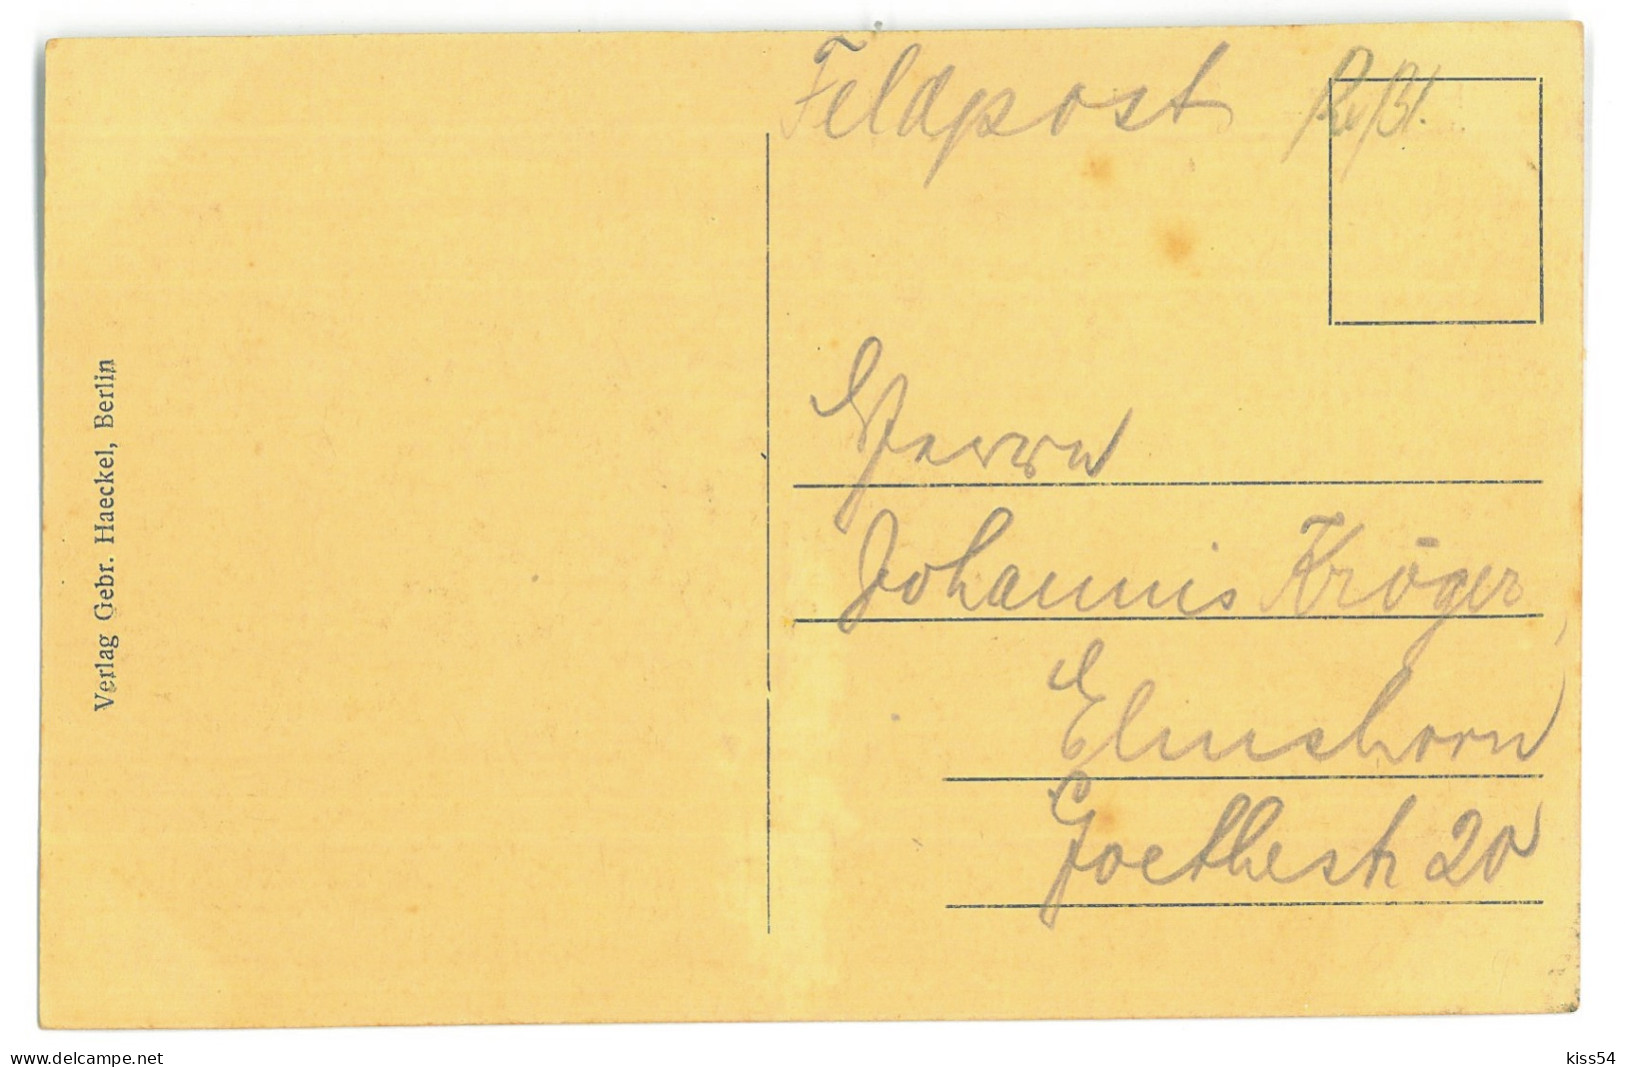 BL 12 - 23584 LIDA, Russian Barracks, Belarus - Old Postcard - Used - 1912 - Weißrussland